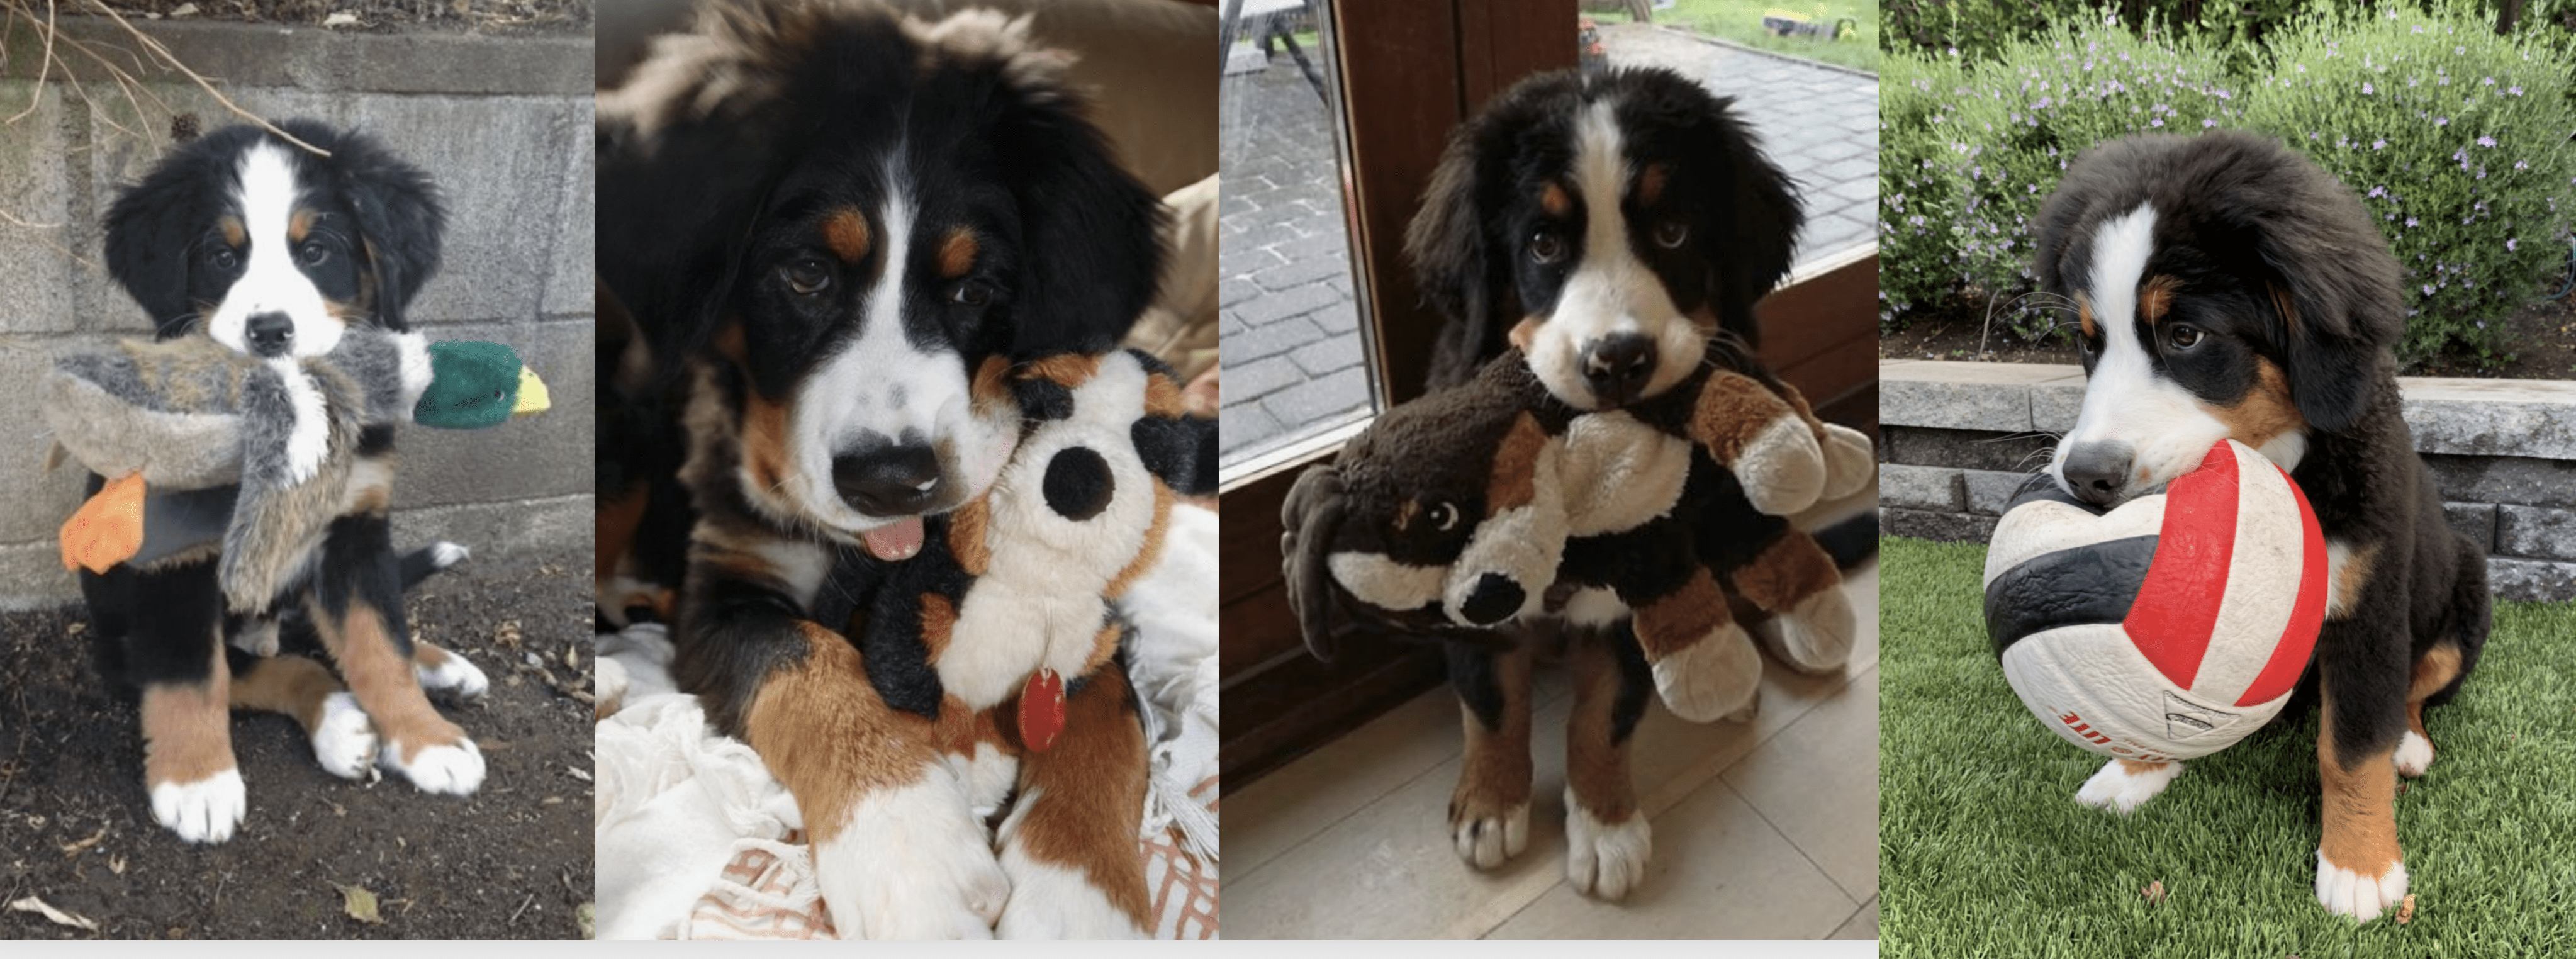 bernese-mountain-dogs-stuffed-animals